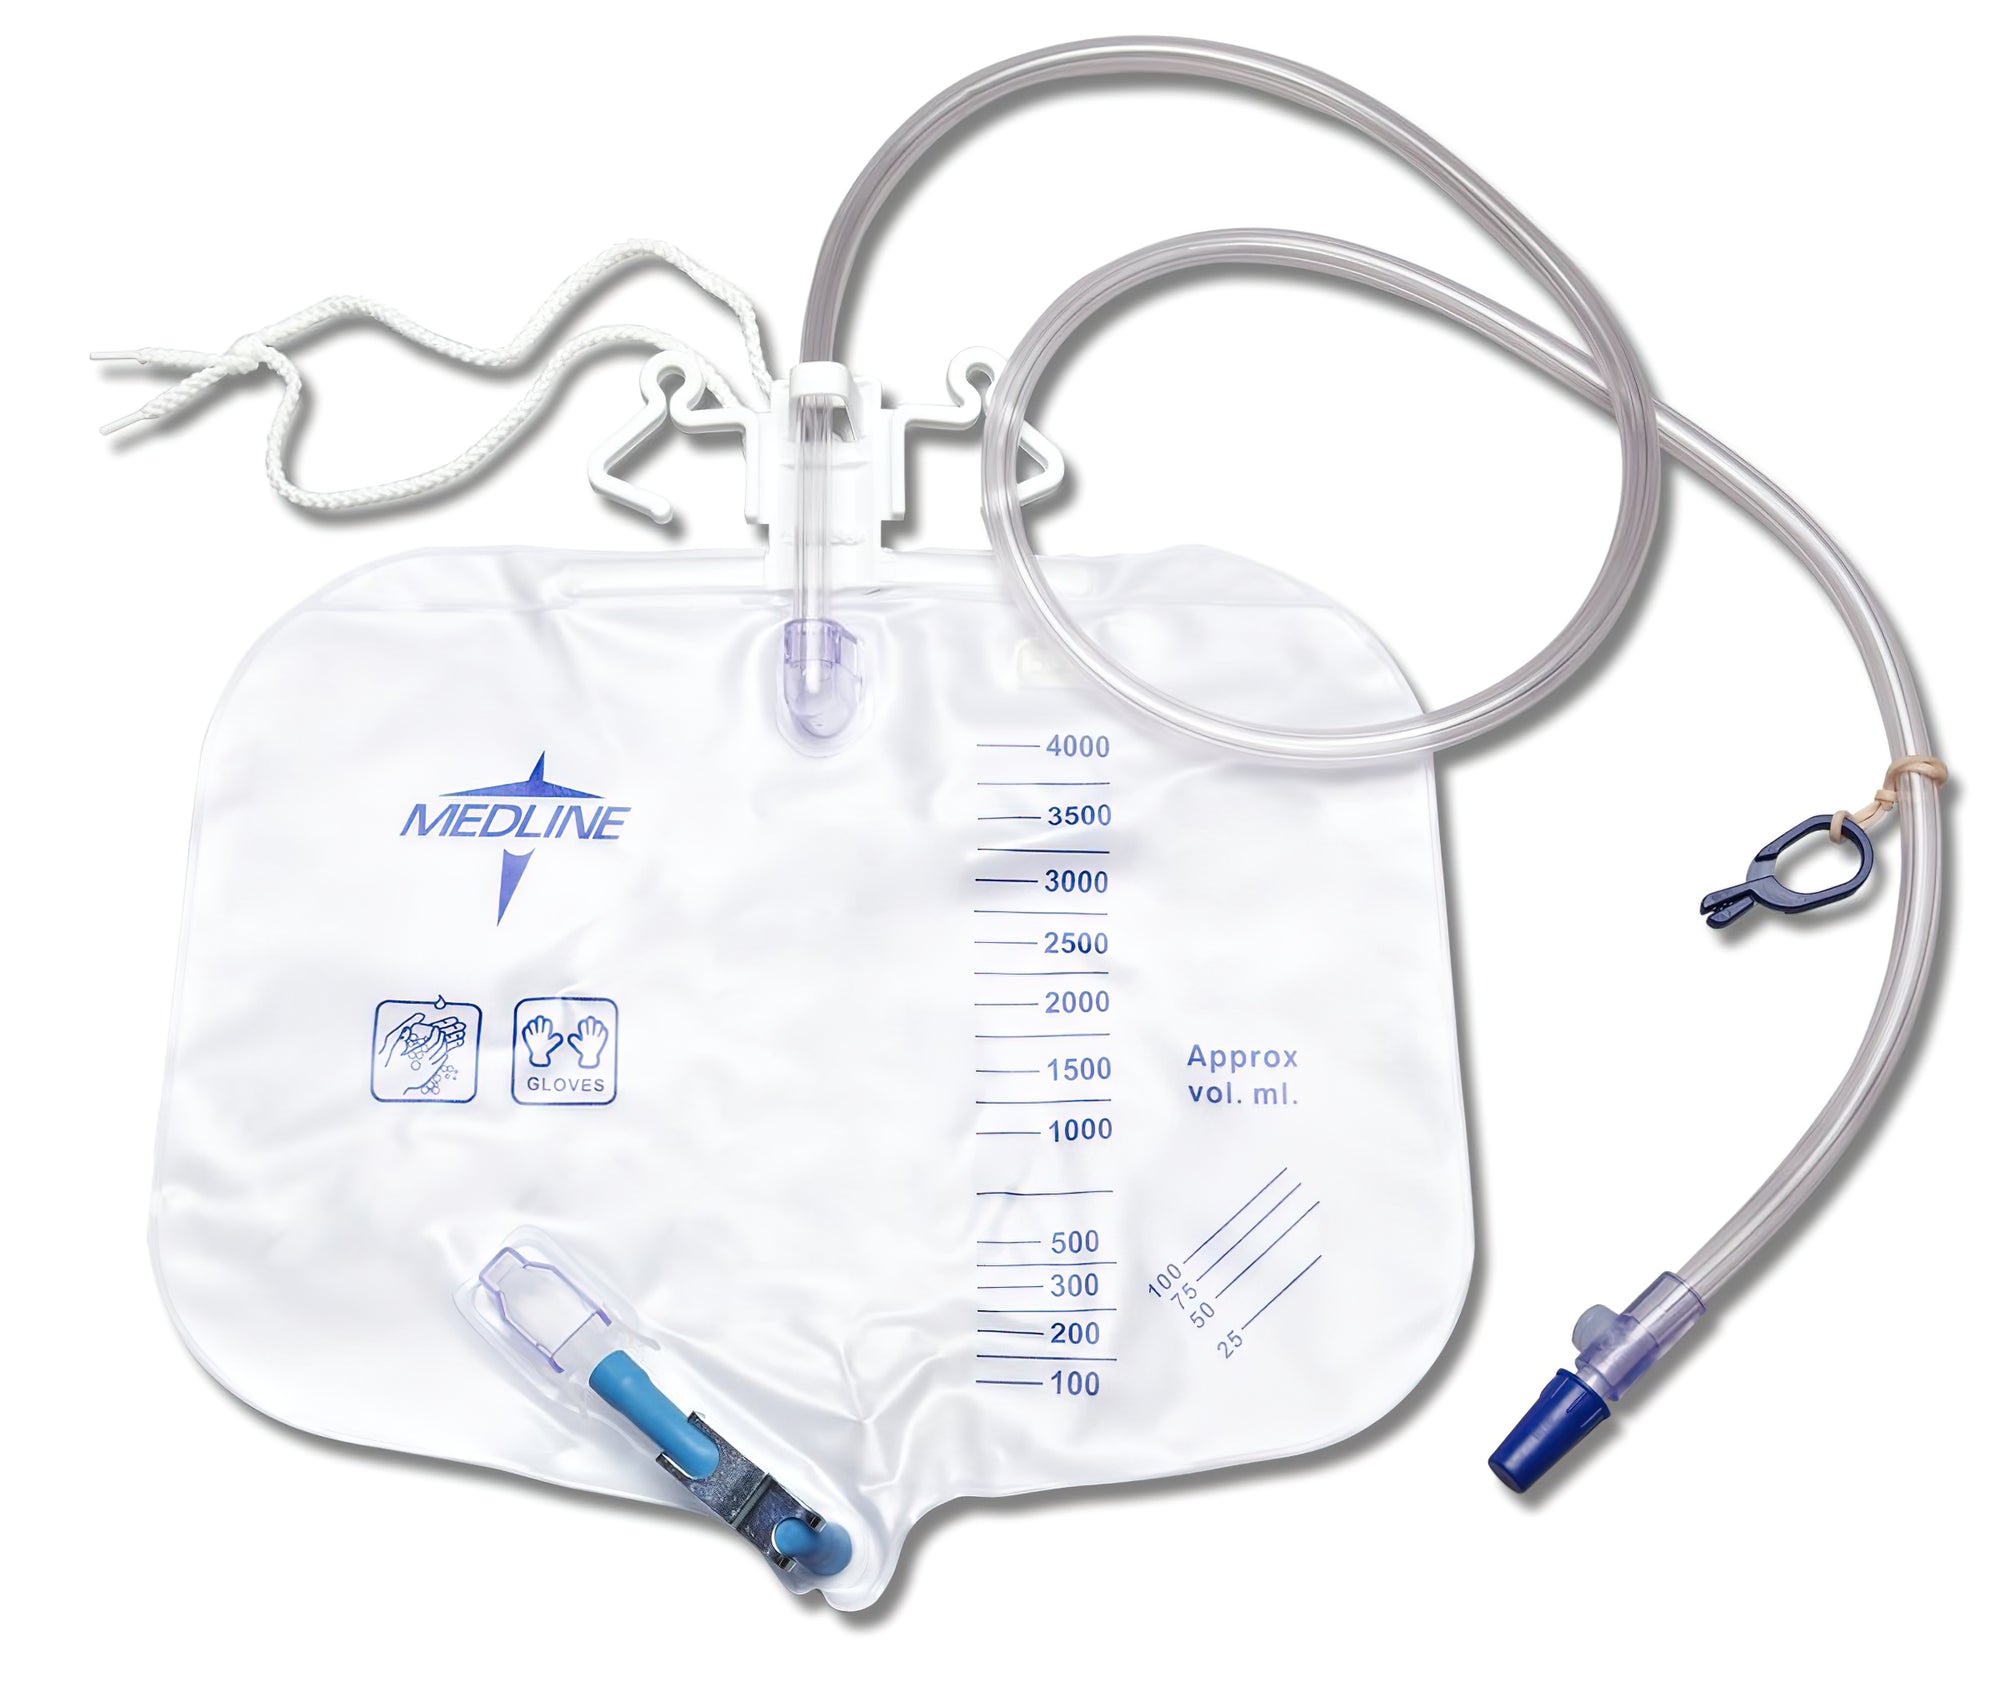 Bard Dispoz-a-Bag Catheter Leg Bag